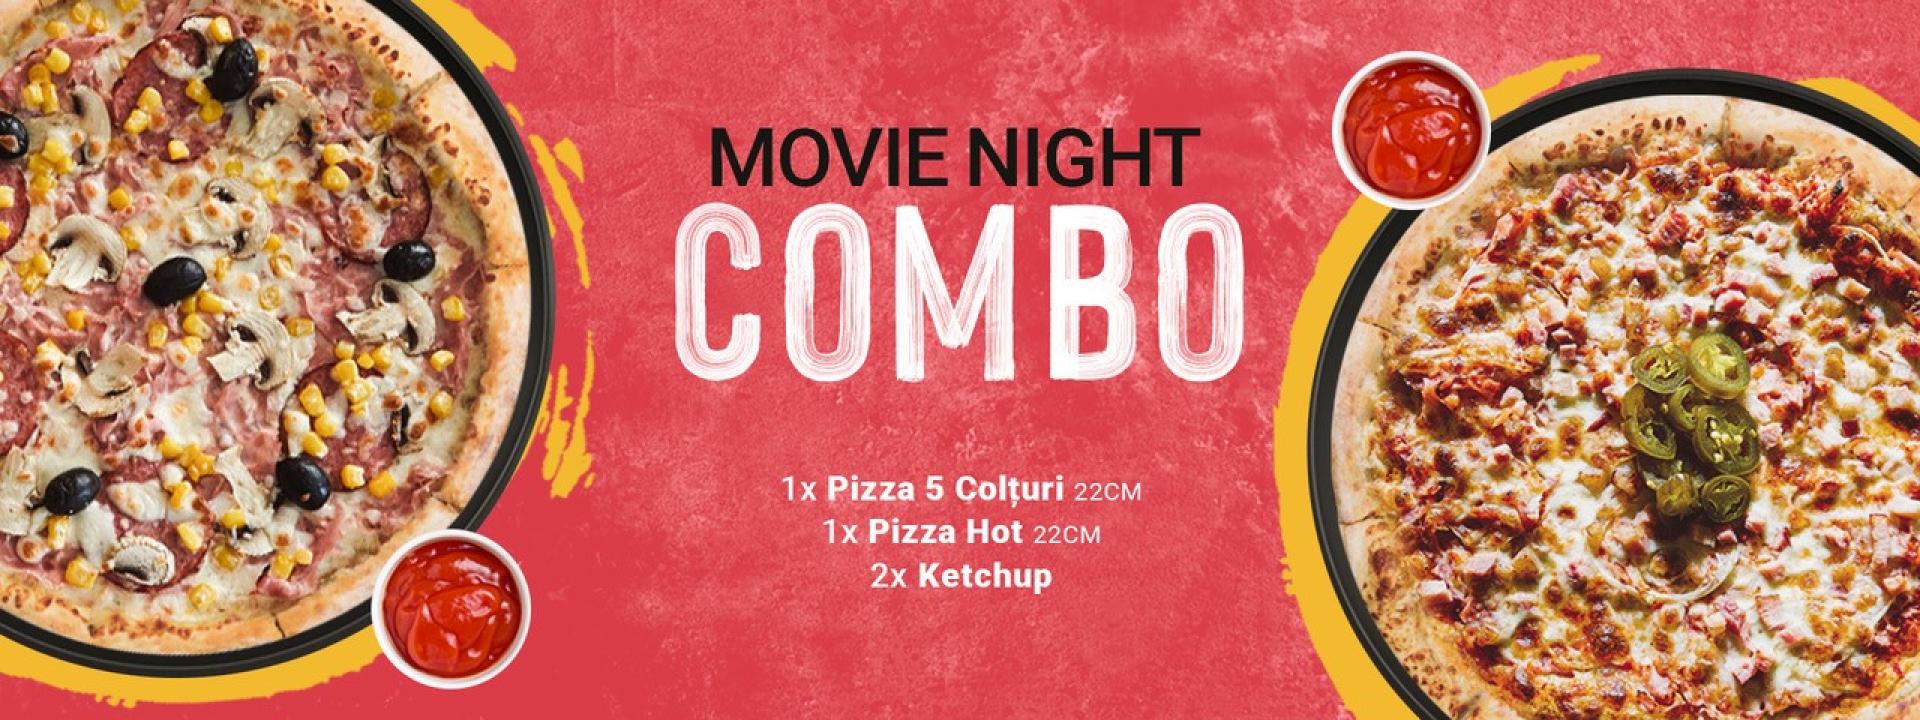 Movie Night Combo